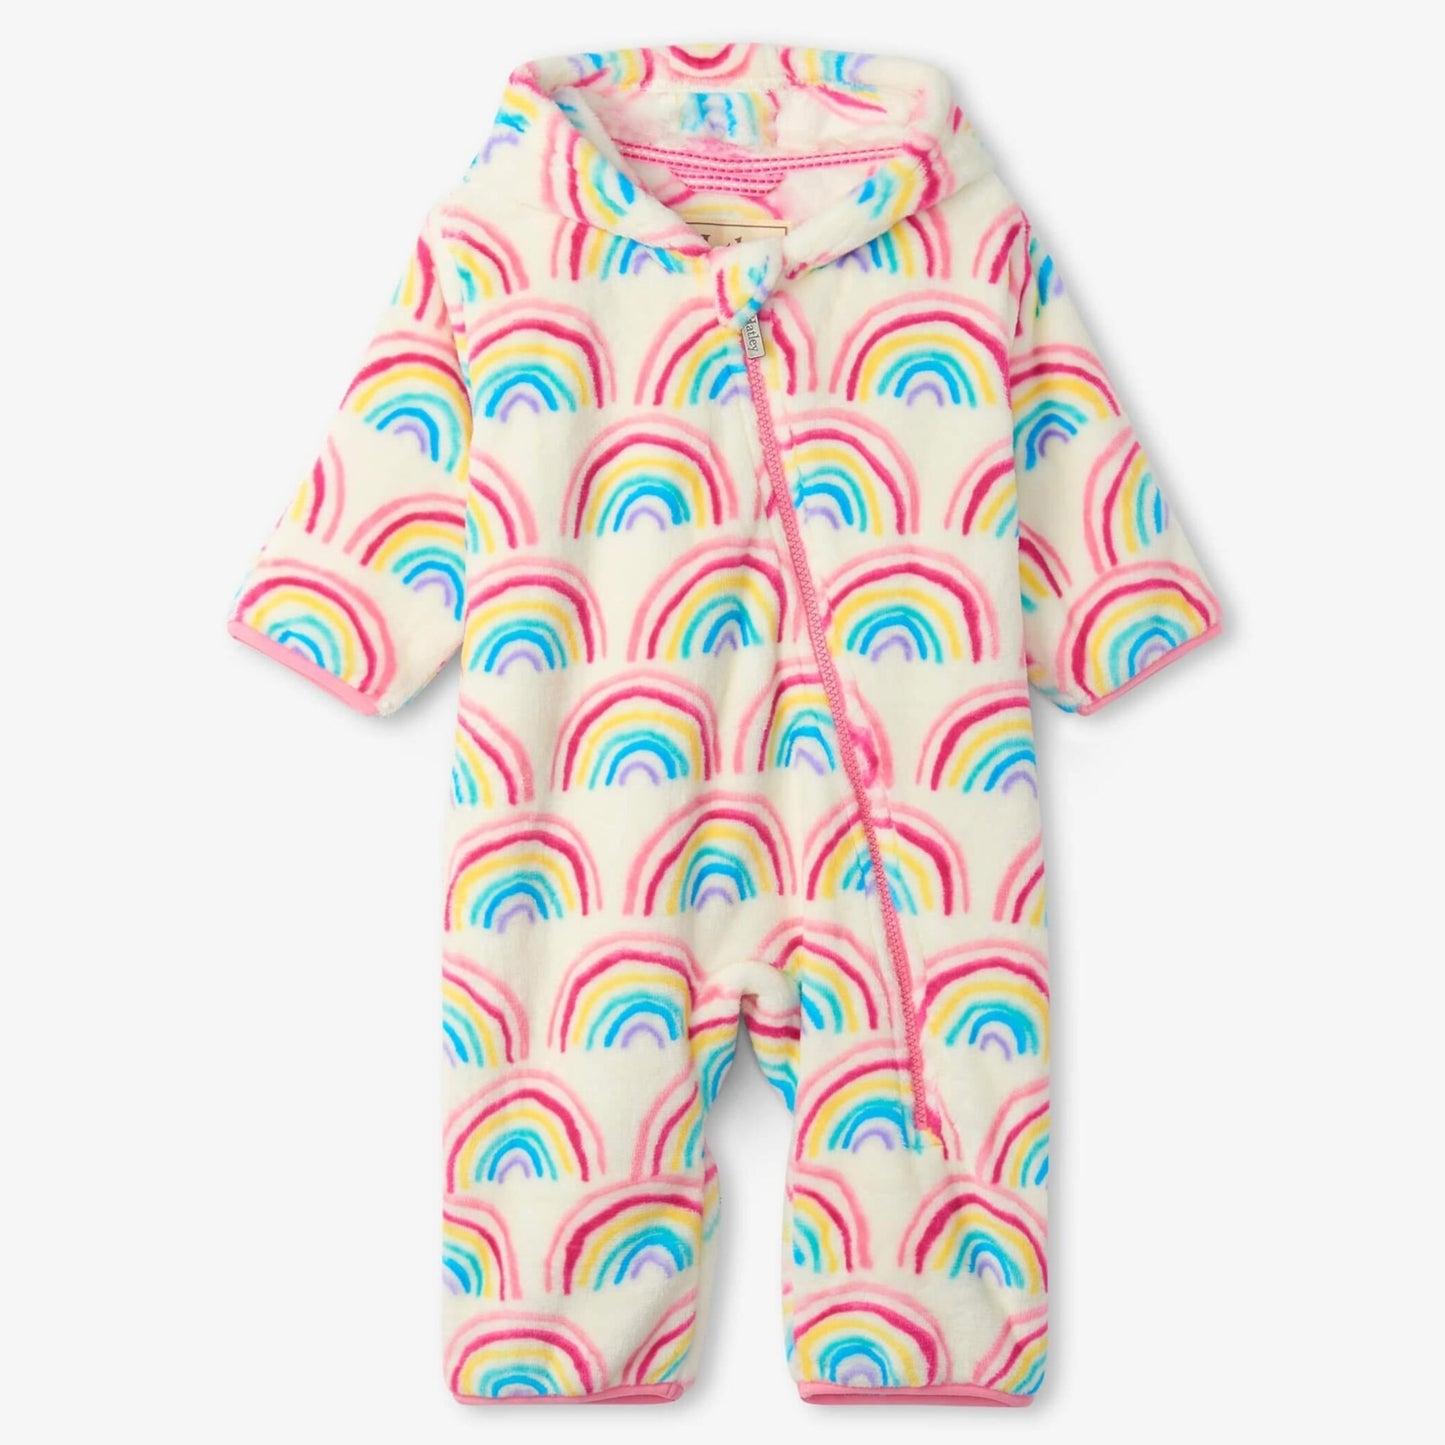 Pretty Rainbows Fleece Baby Bundler